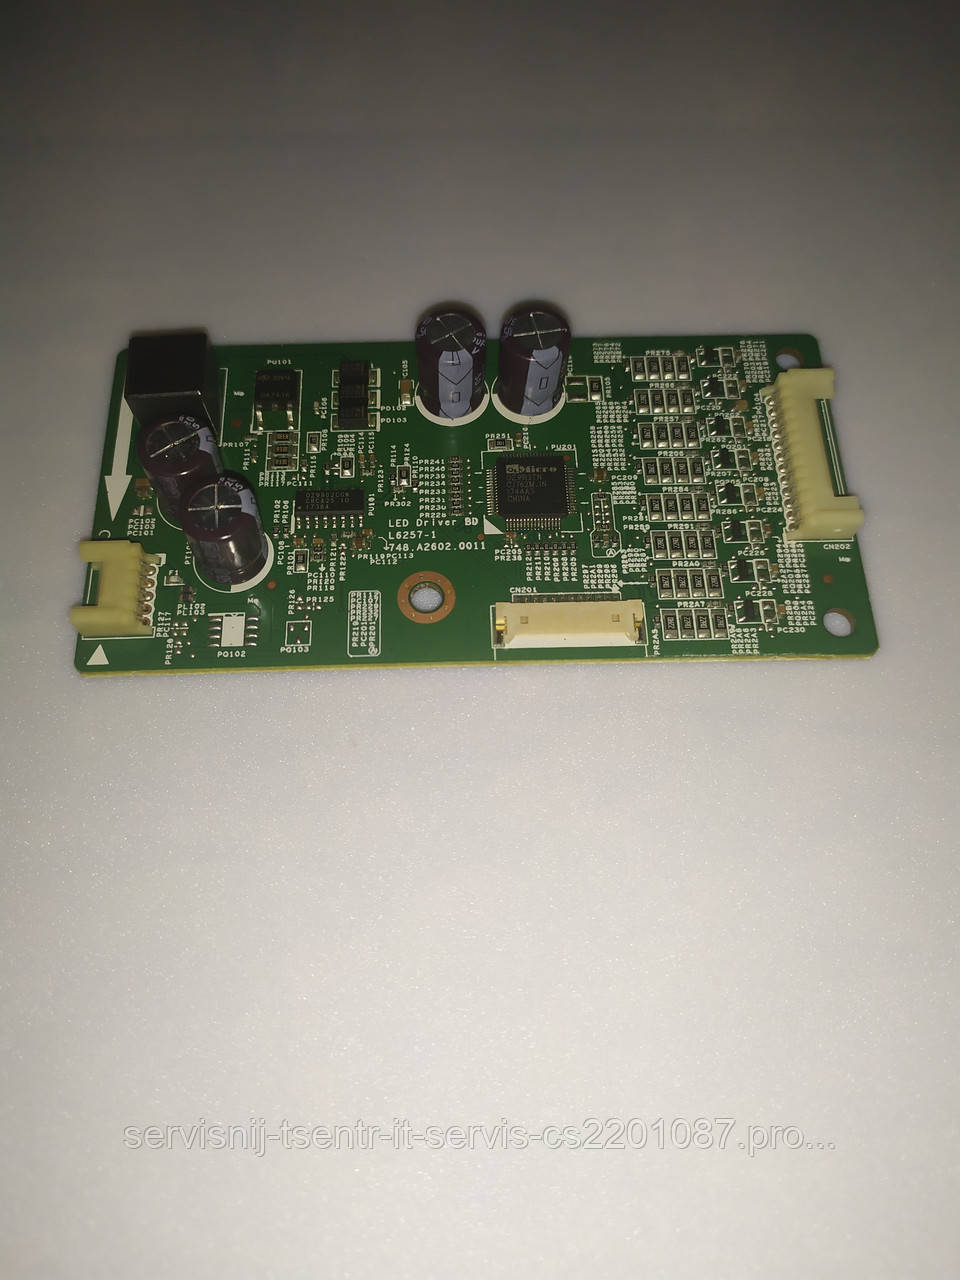 Інвертор (Inverter Board) L6257-1 (748.A2602.0011) для монітора DELL